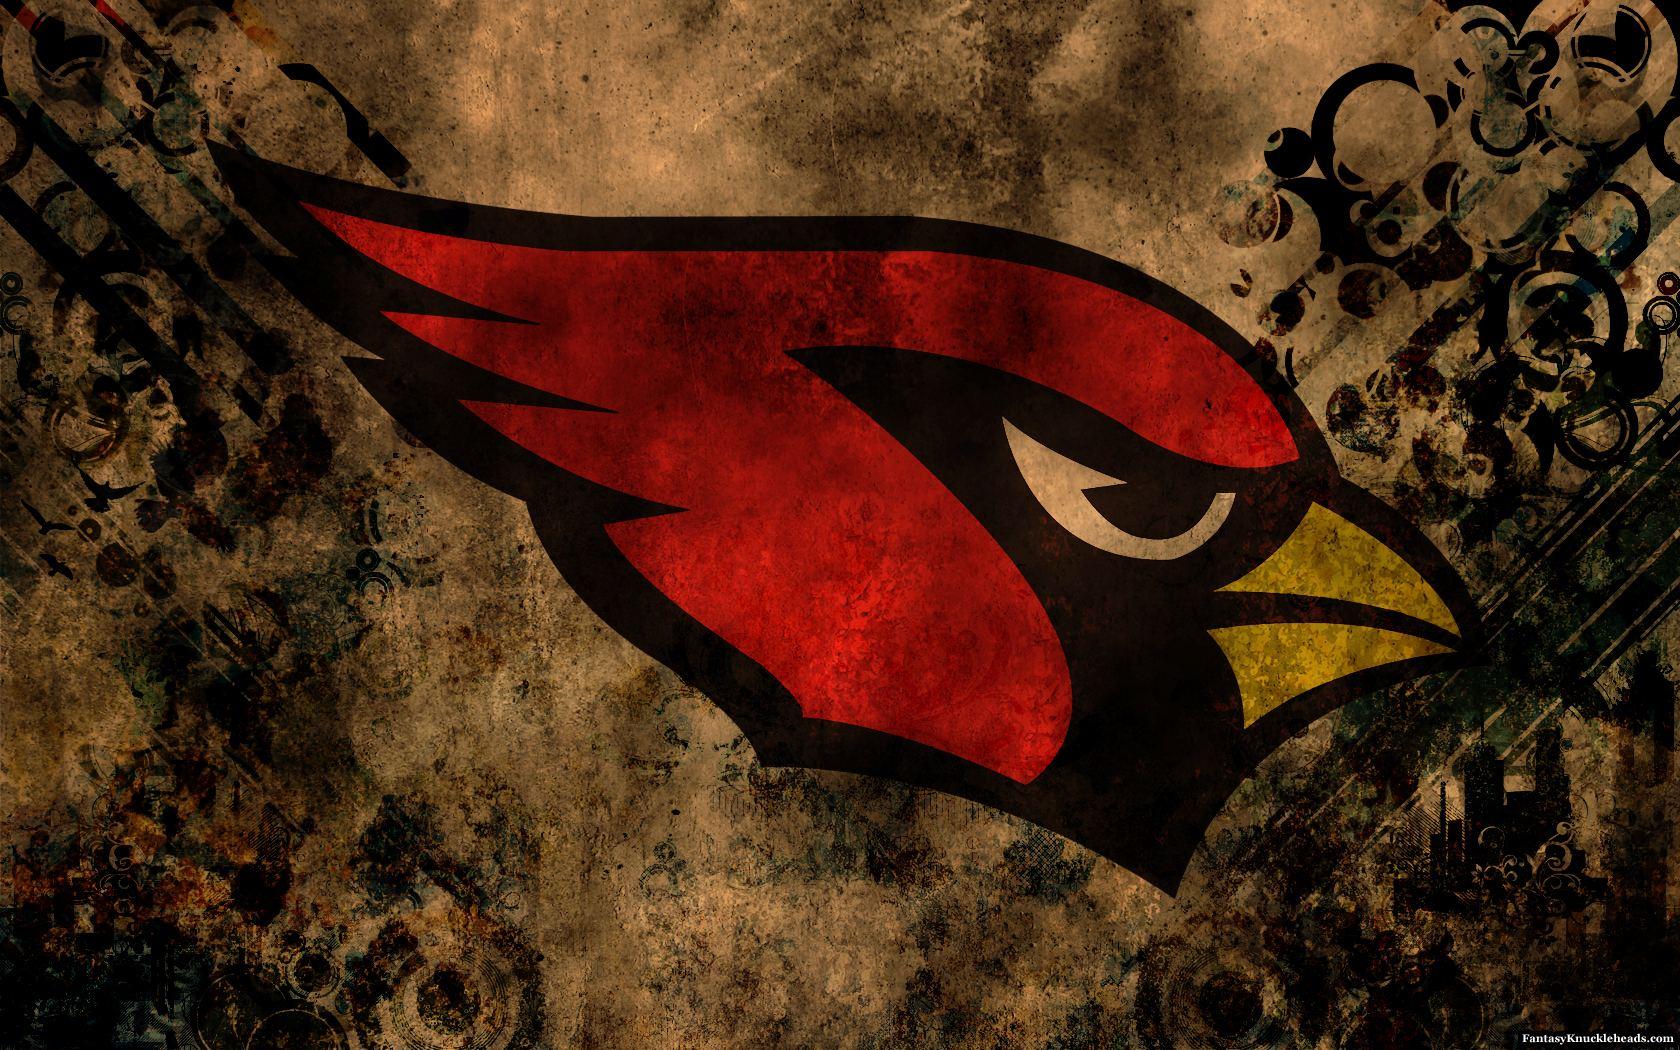 Arizona Cardinals wallpaper HD free download